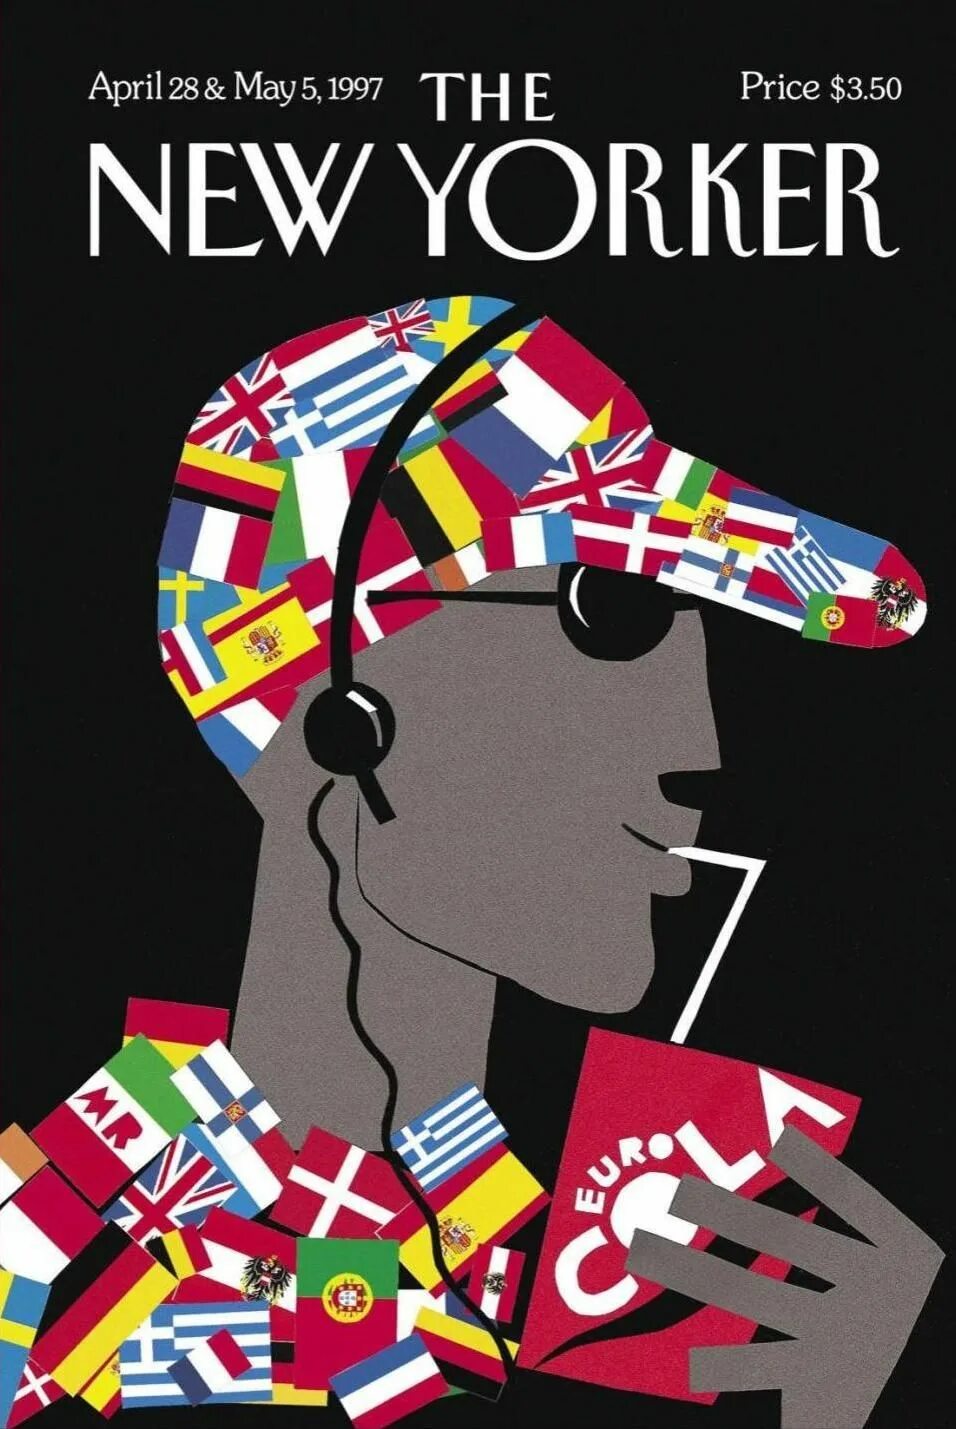 Журнал Нью йоркер обложки. Обложки журнала New Yorker. Постеры обложки журналов New Yorker. Журнал Нью йоркер обложки 2022. Журнал new yorker